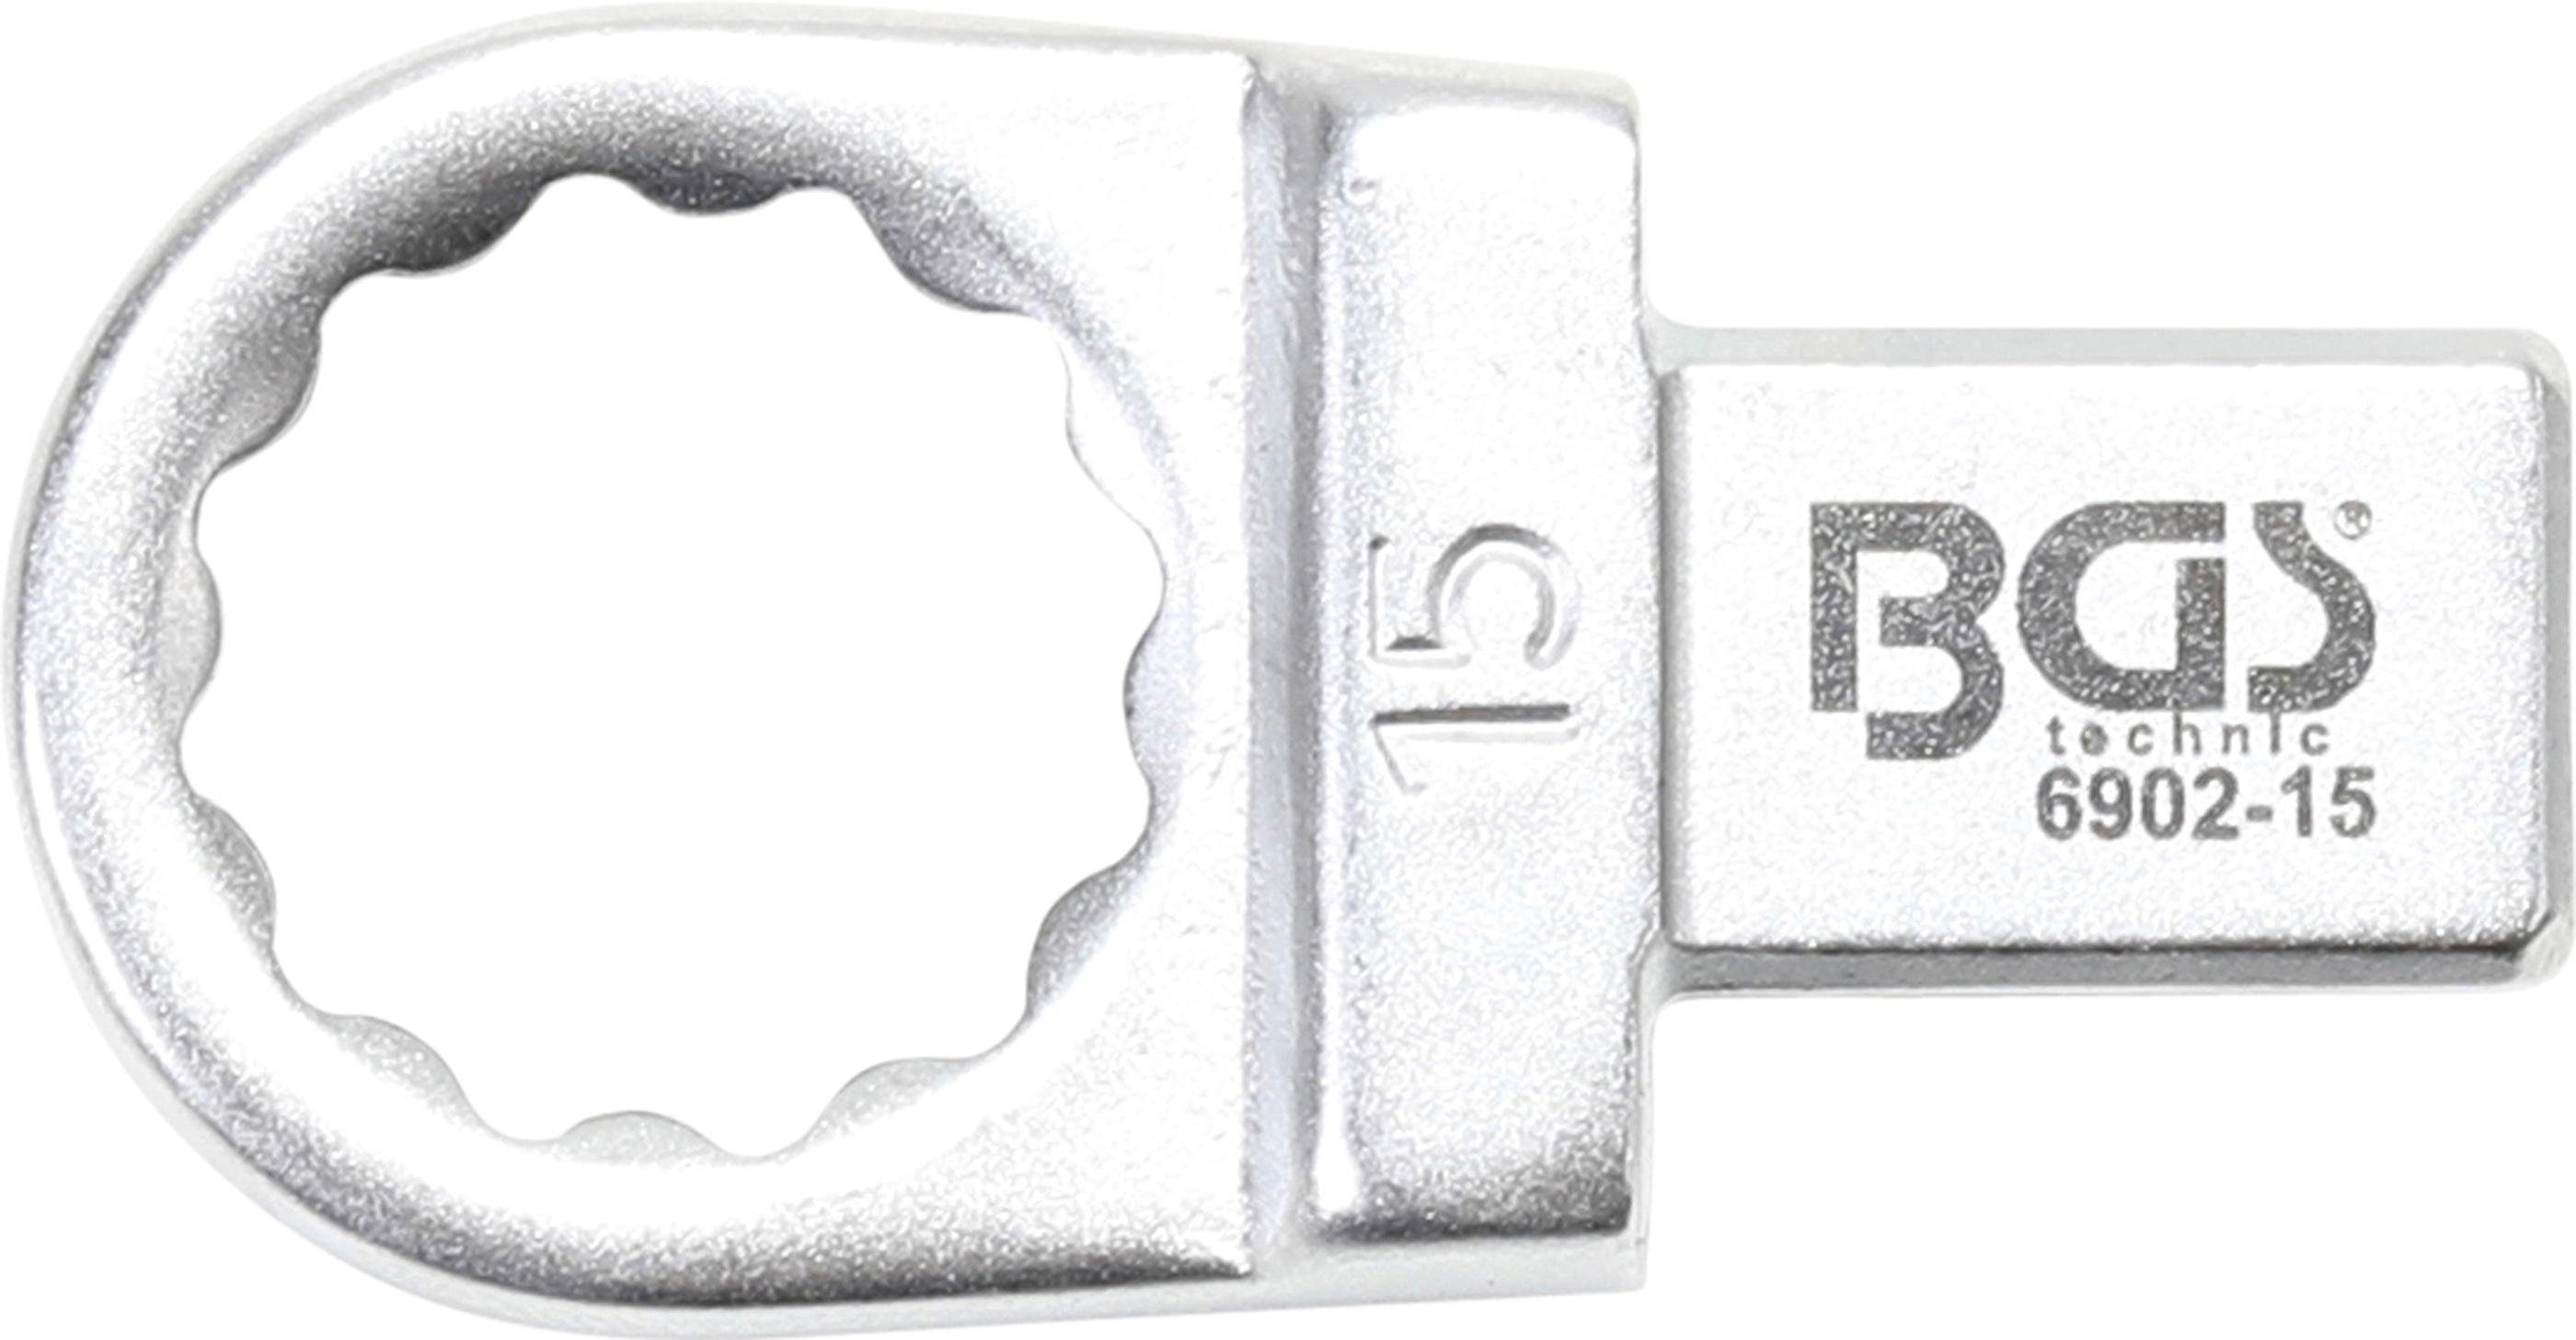 Aufnahme BGS 9 technic mm, Ausstechform mm 15 x Einsteck-Ringschlüssel, 12